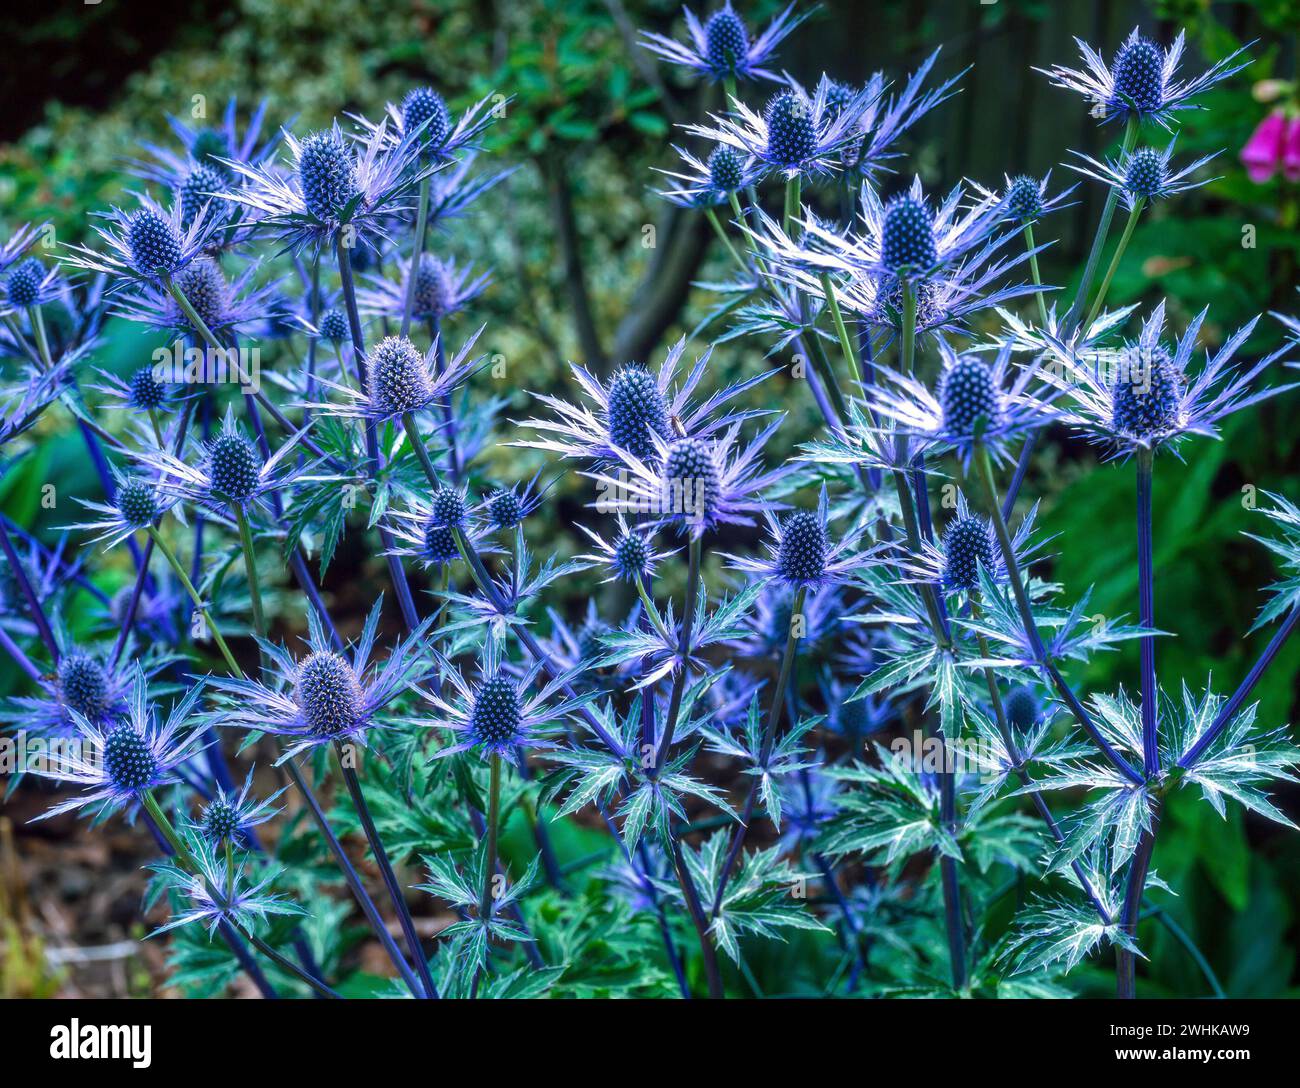 Backlit Blue Eryngium x zabelii 'Jos Eijking' sea holly thistle flowers in garden border, England, UK Stock Photo